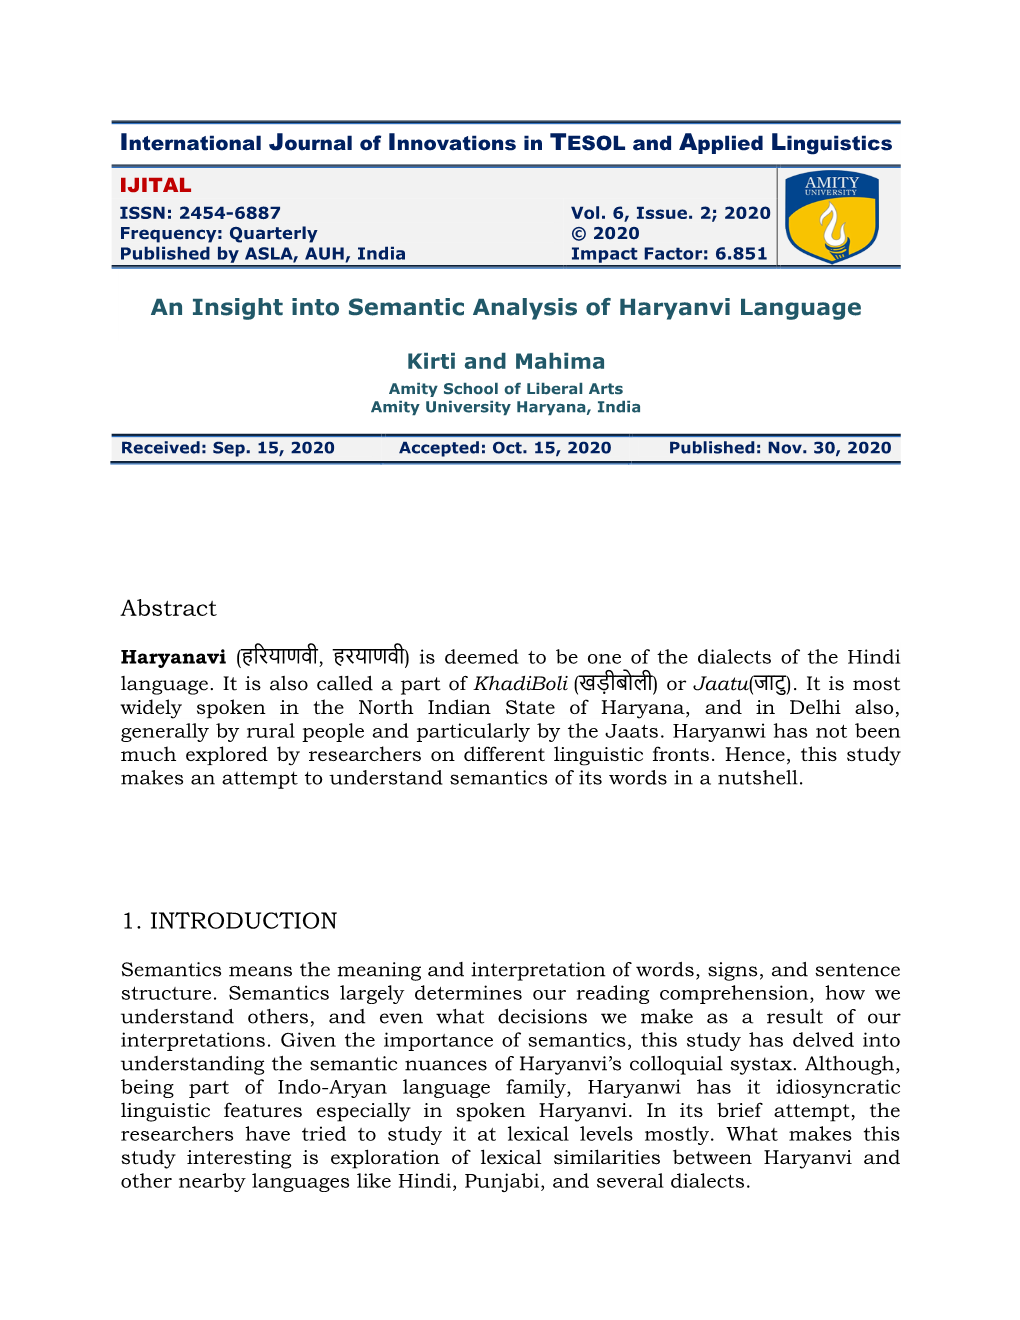 An Insight Into Semantic Analysis of Haryanvi Language